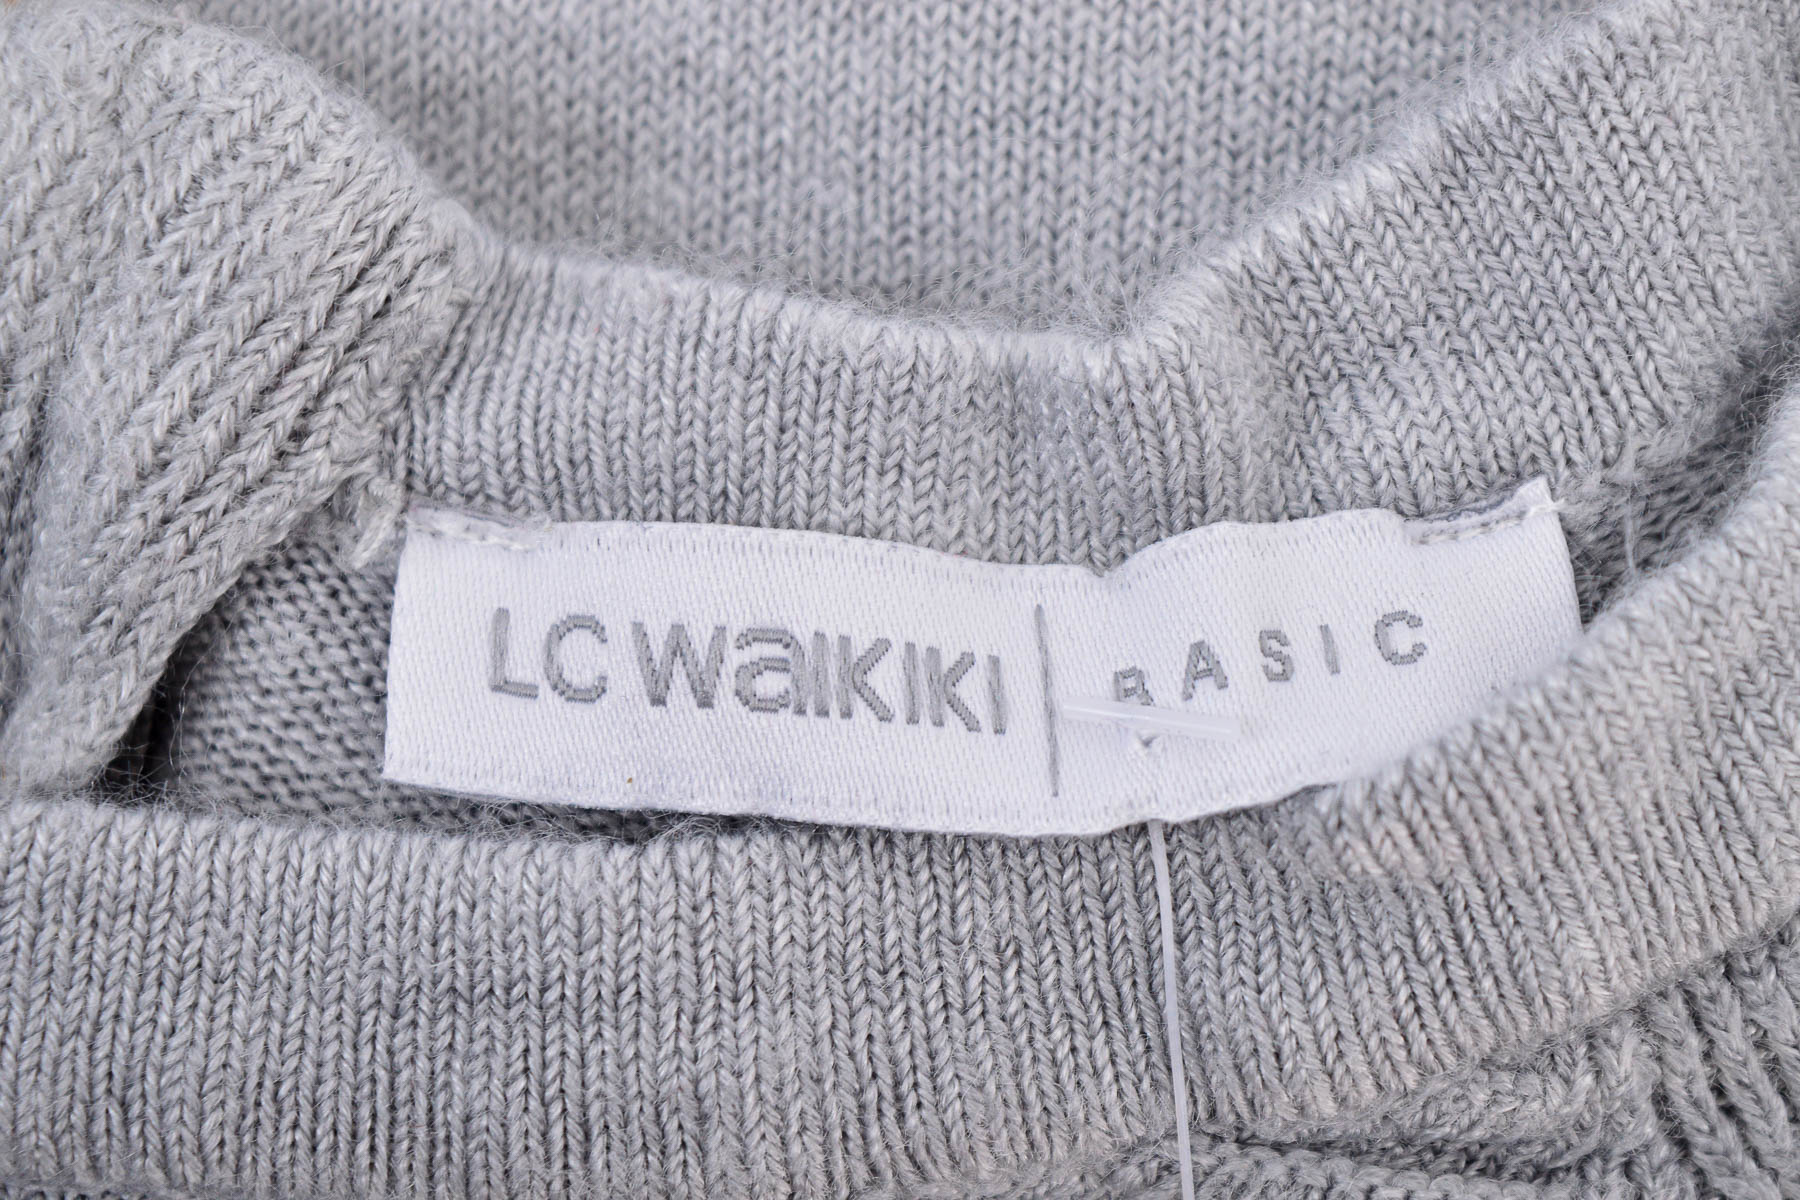 Дамски пуловер - LC Waikiki BASIC - 2